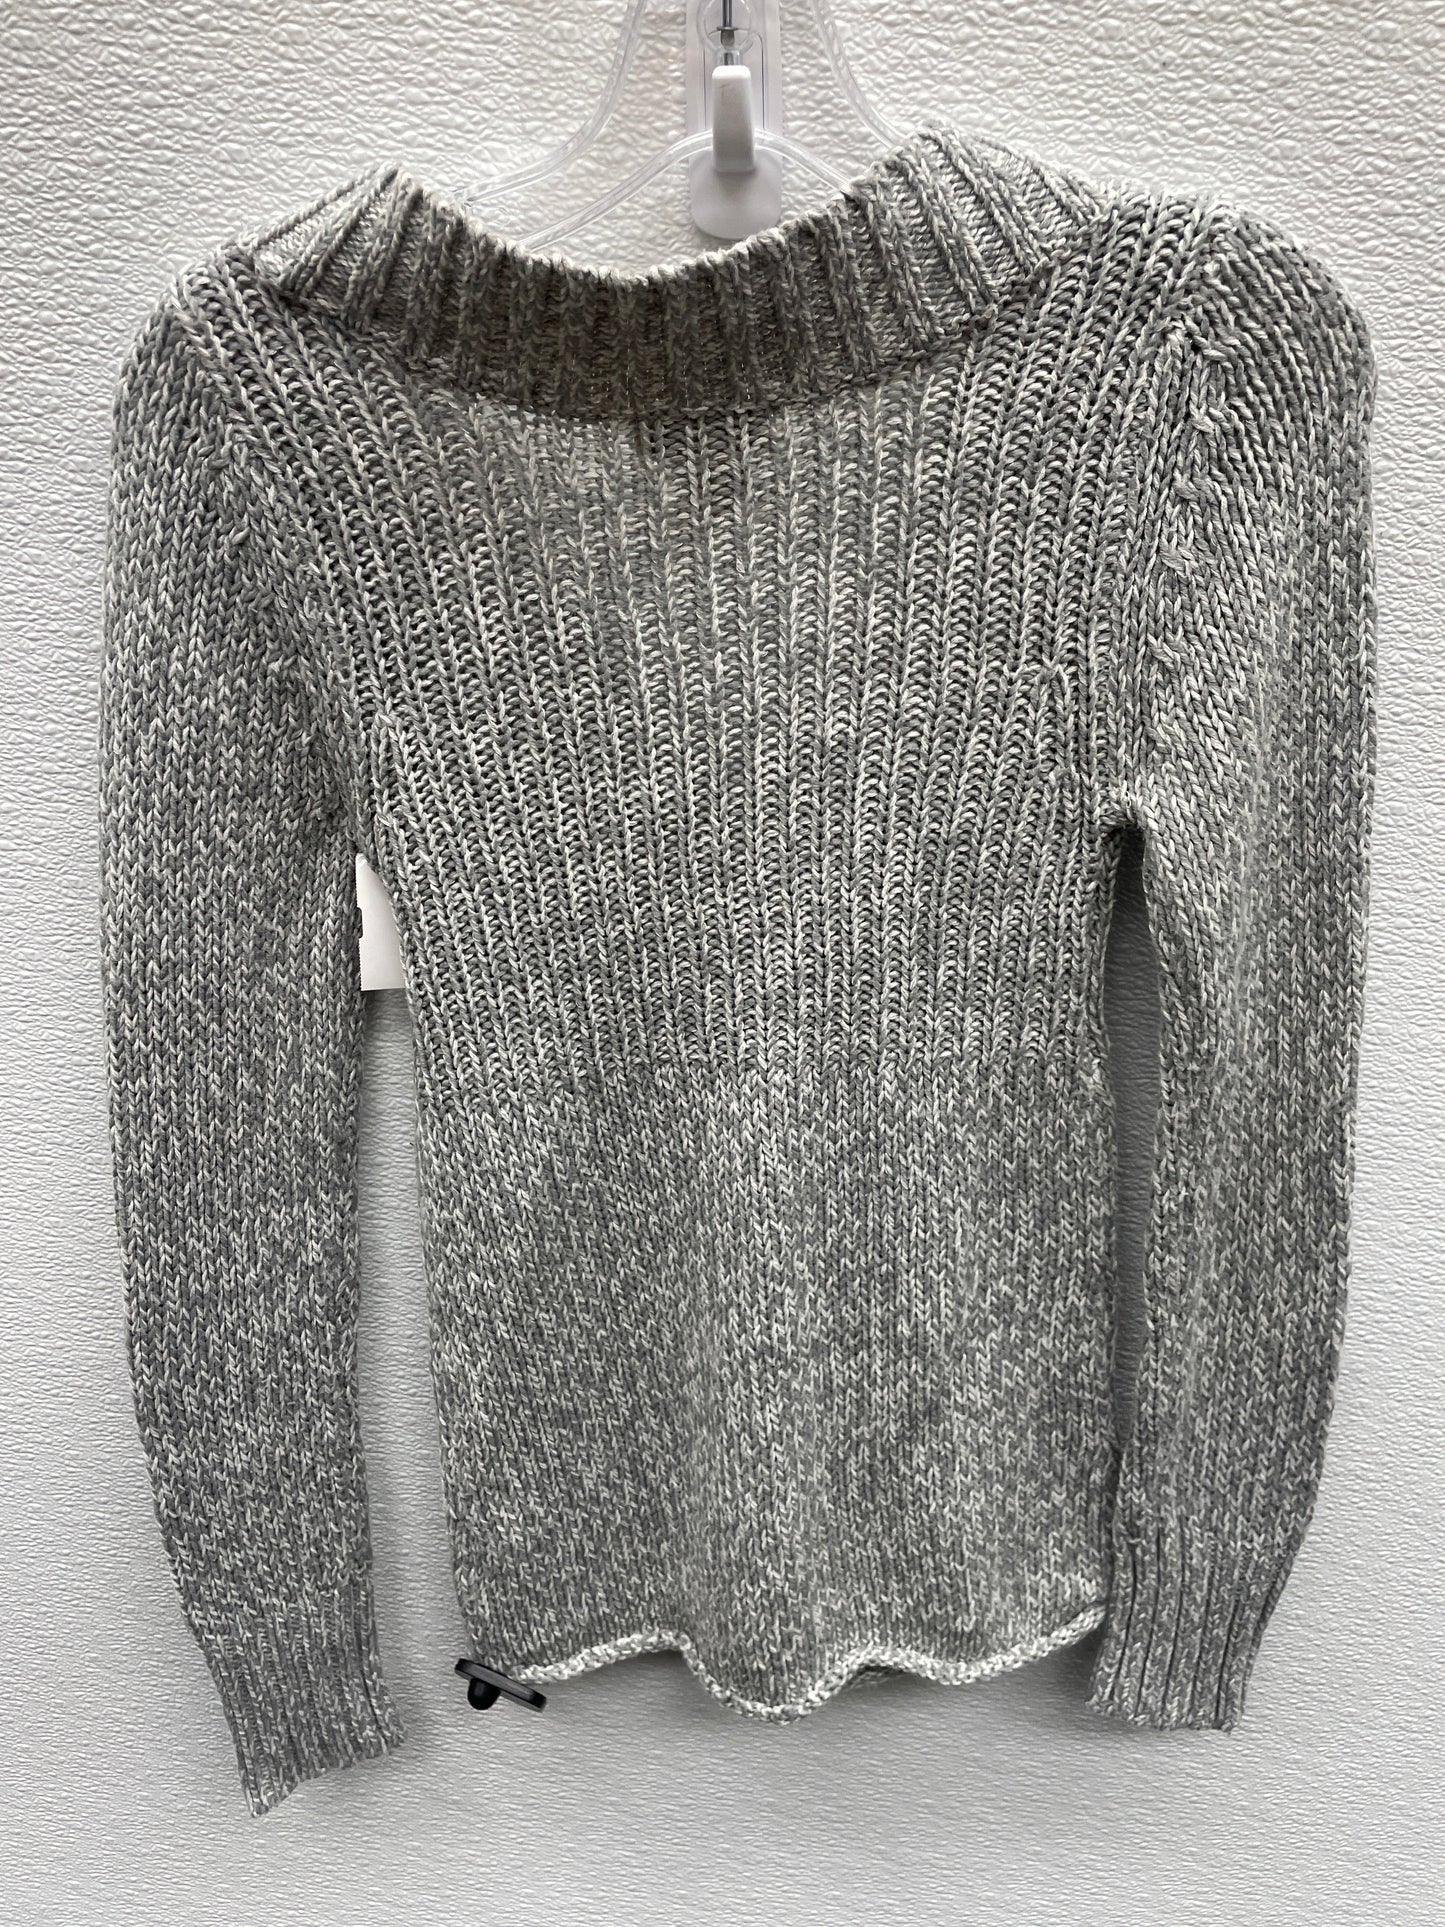 Sweater By Arizona  Size: S